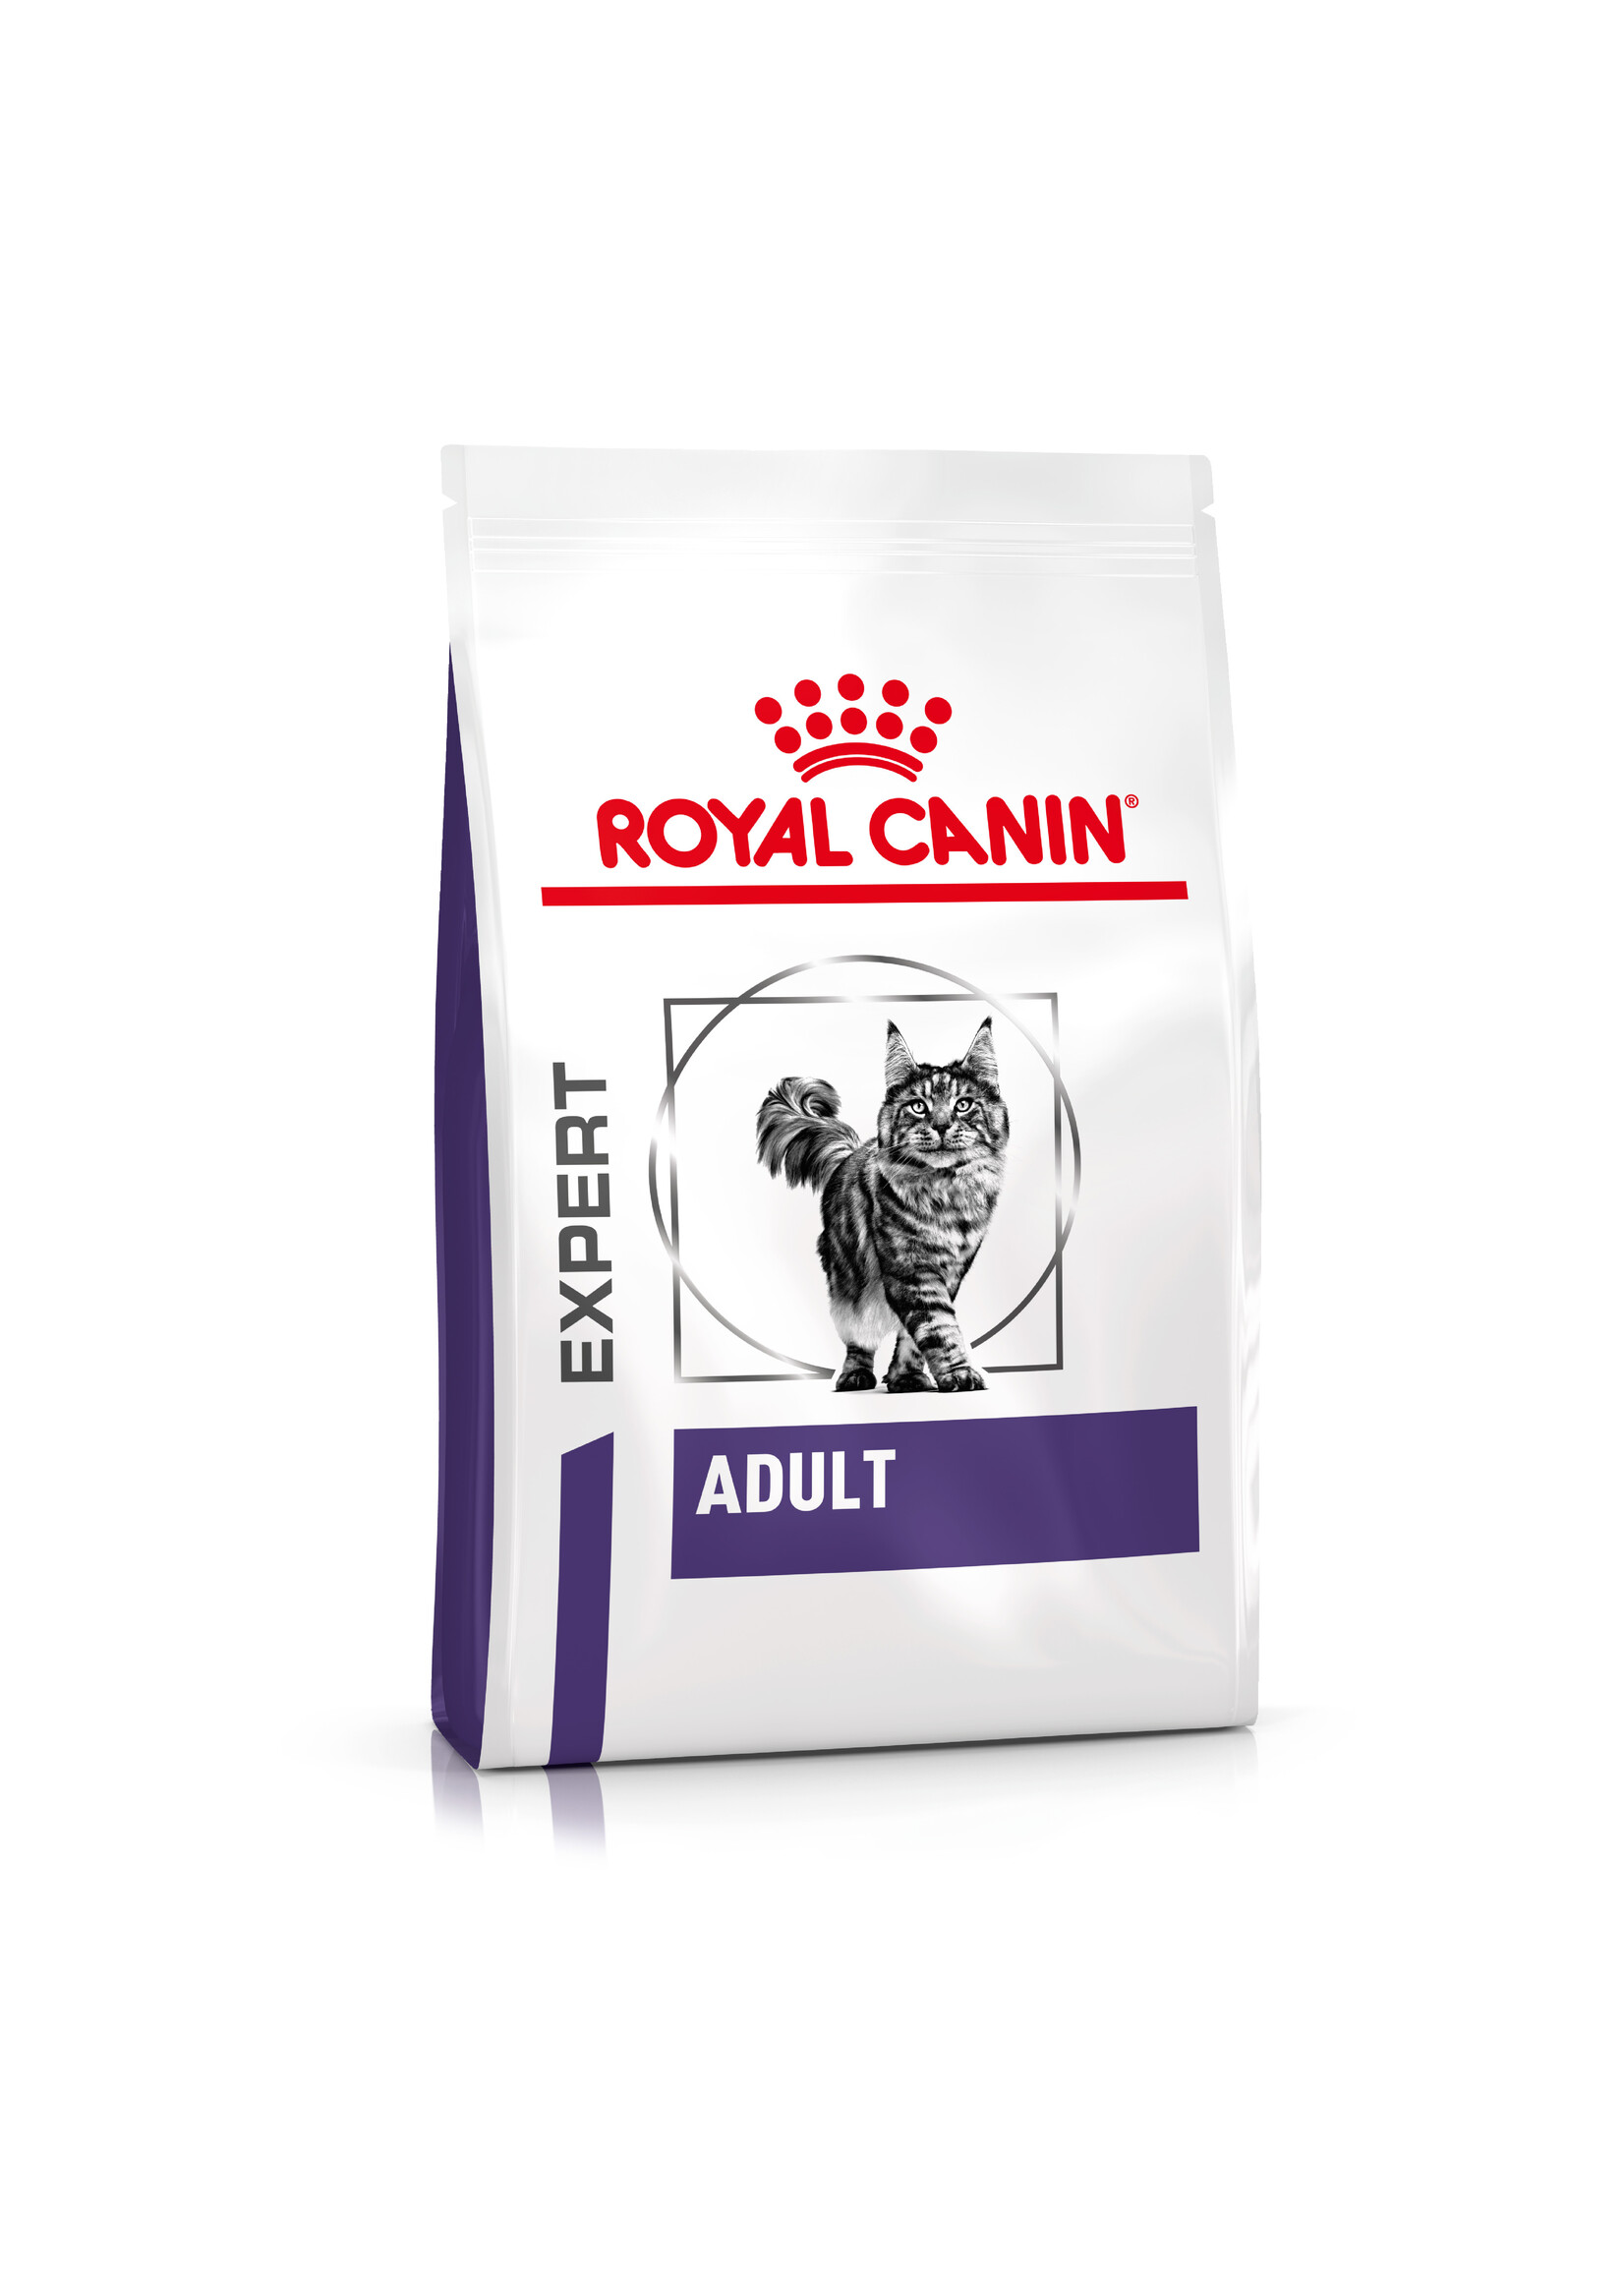 Royal Canin Royal Canin Adult Cat